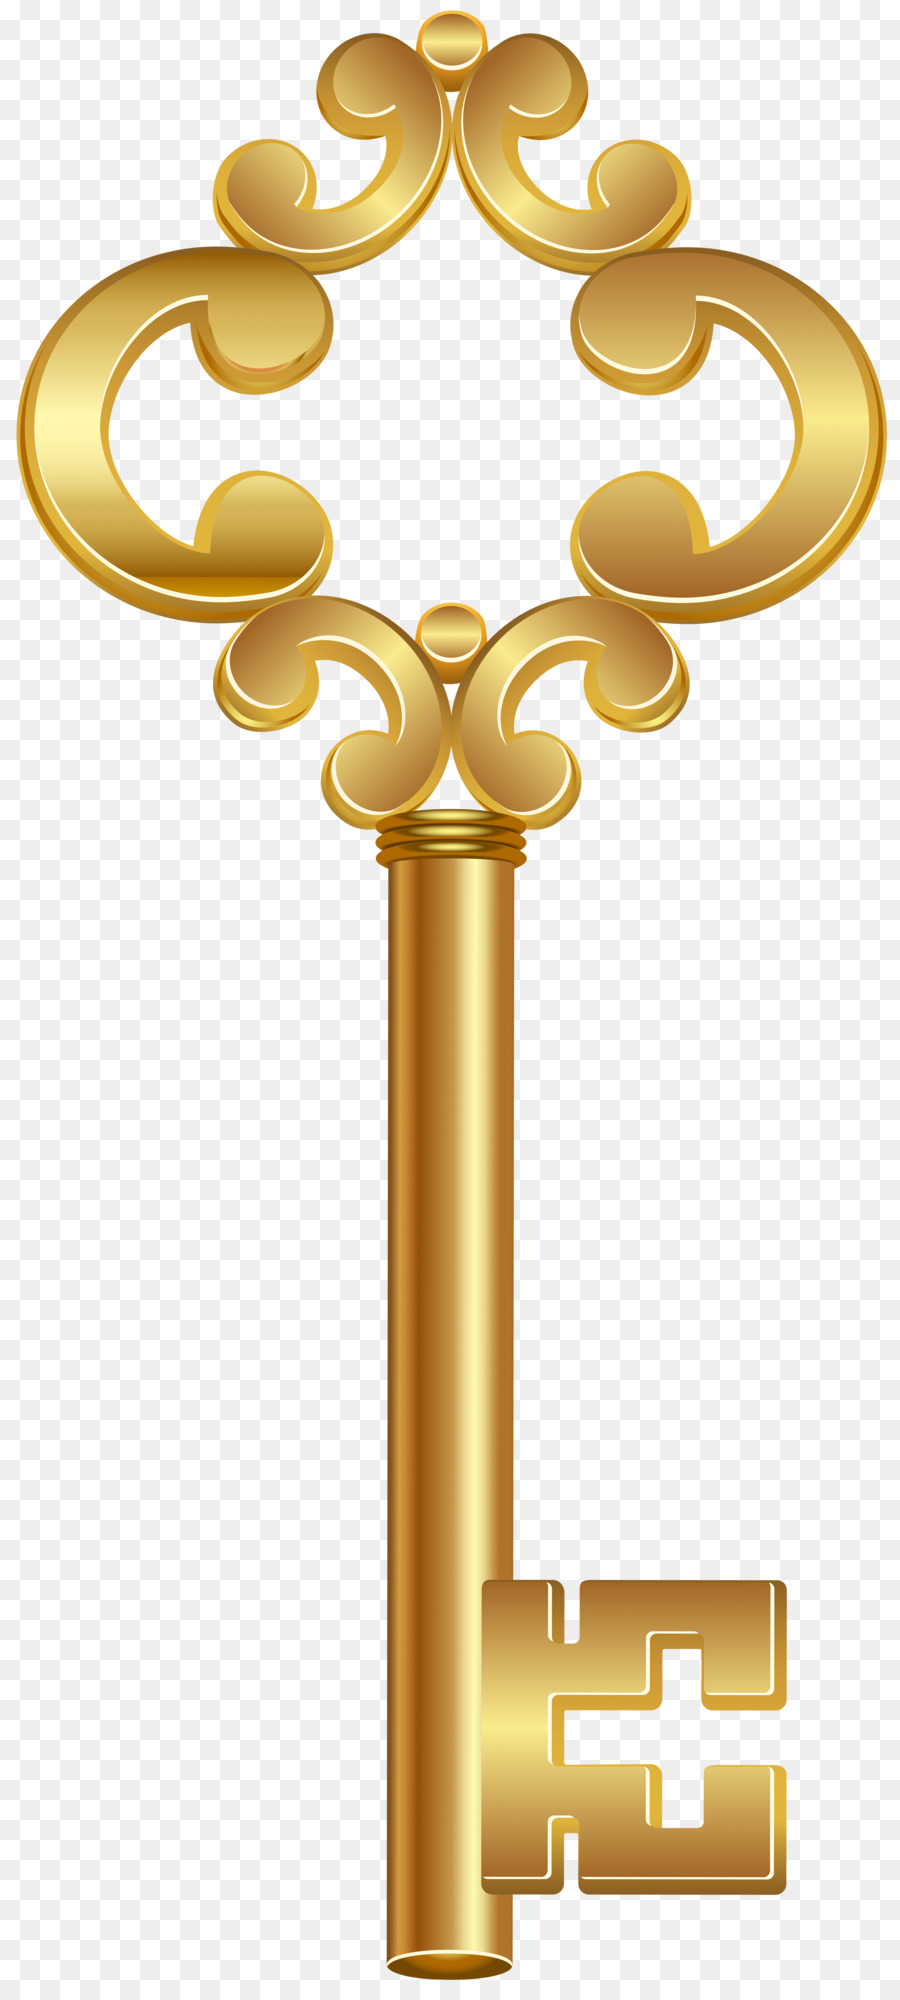 Chiave d'oro Clip art - chiave